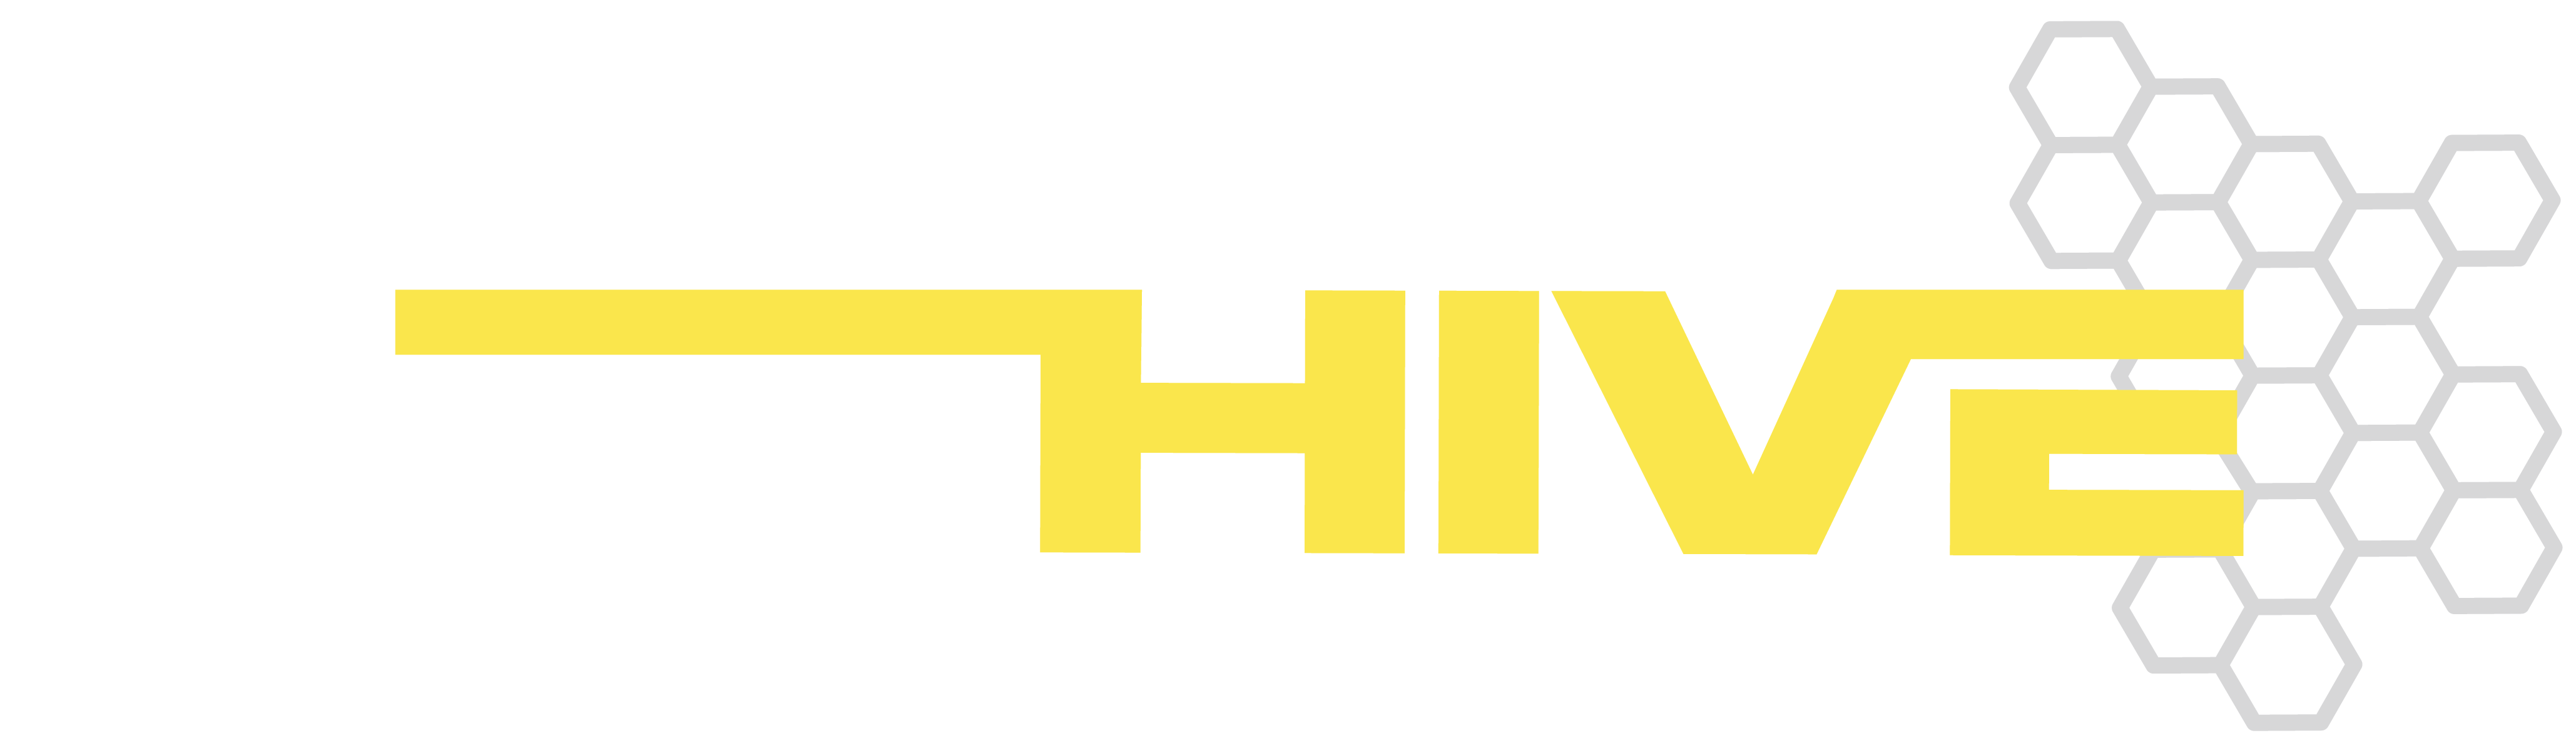 Beehive Storage alternate logo